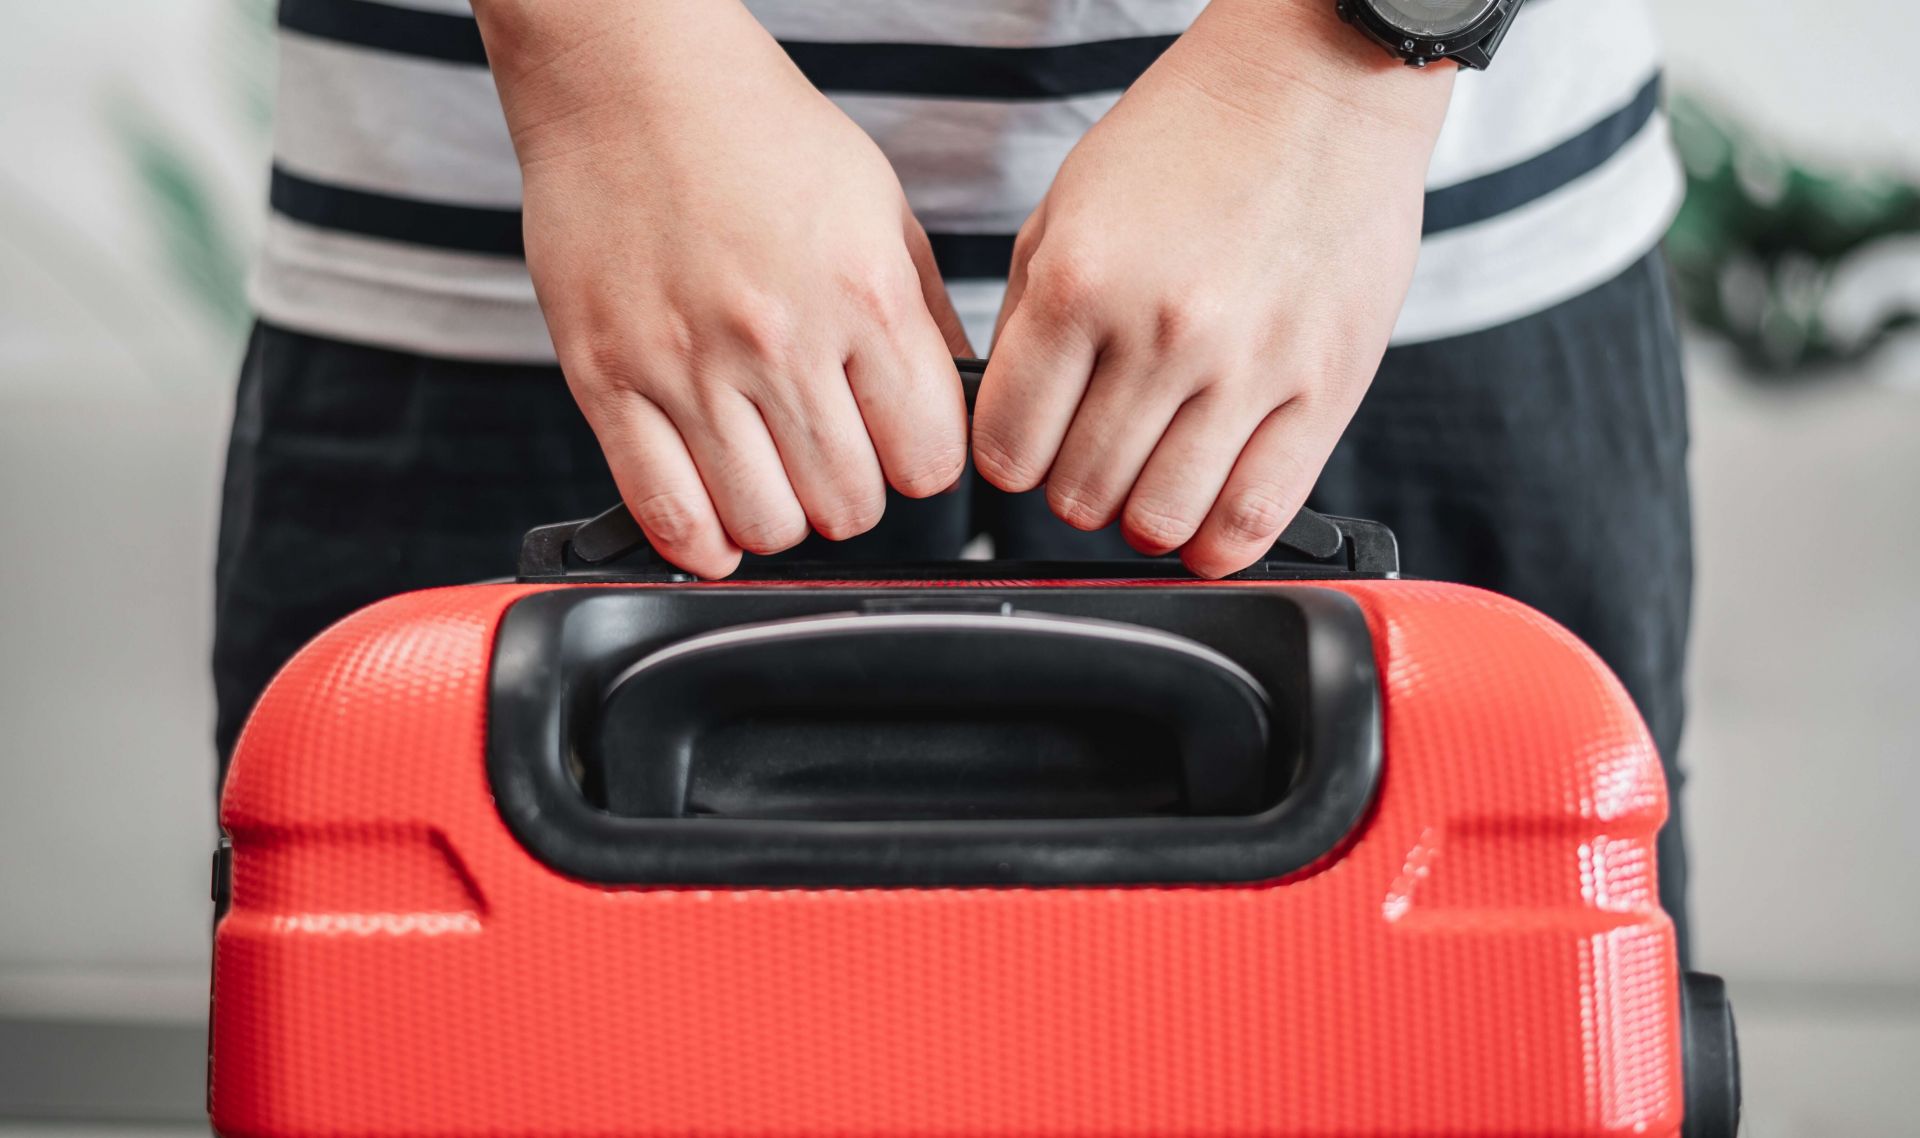 holding-suitcase